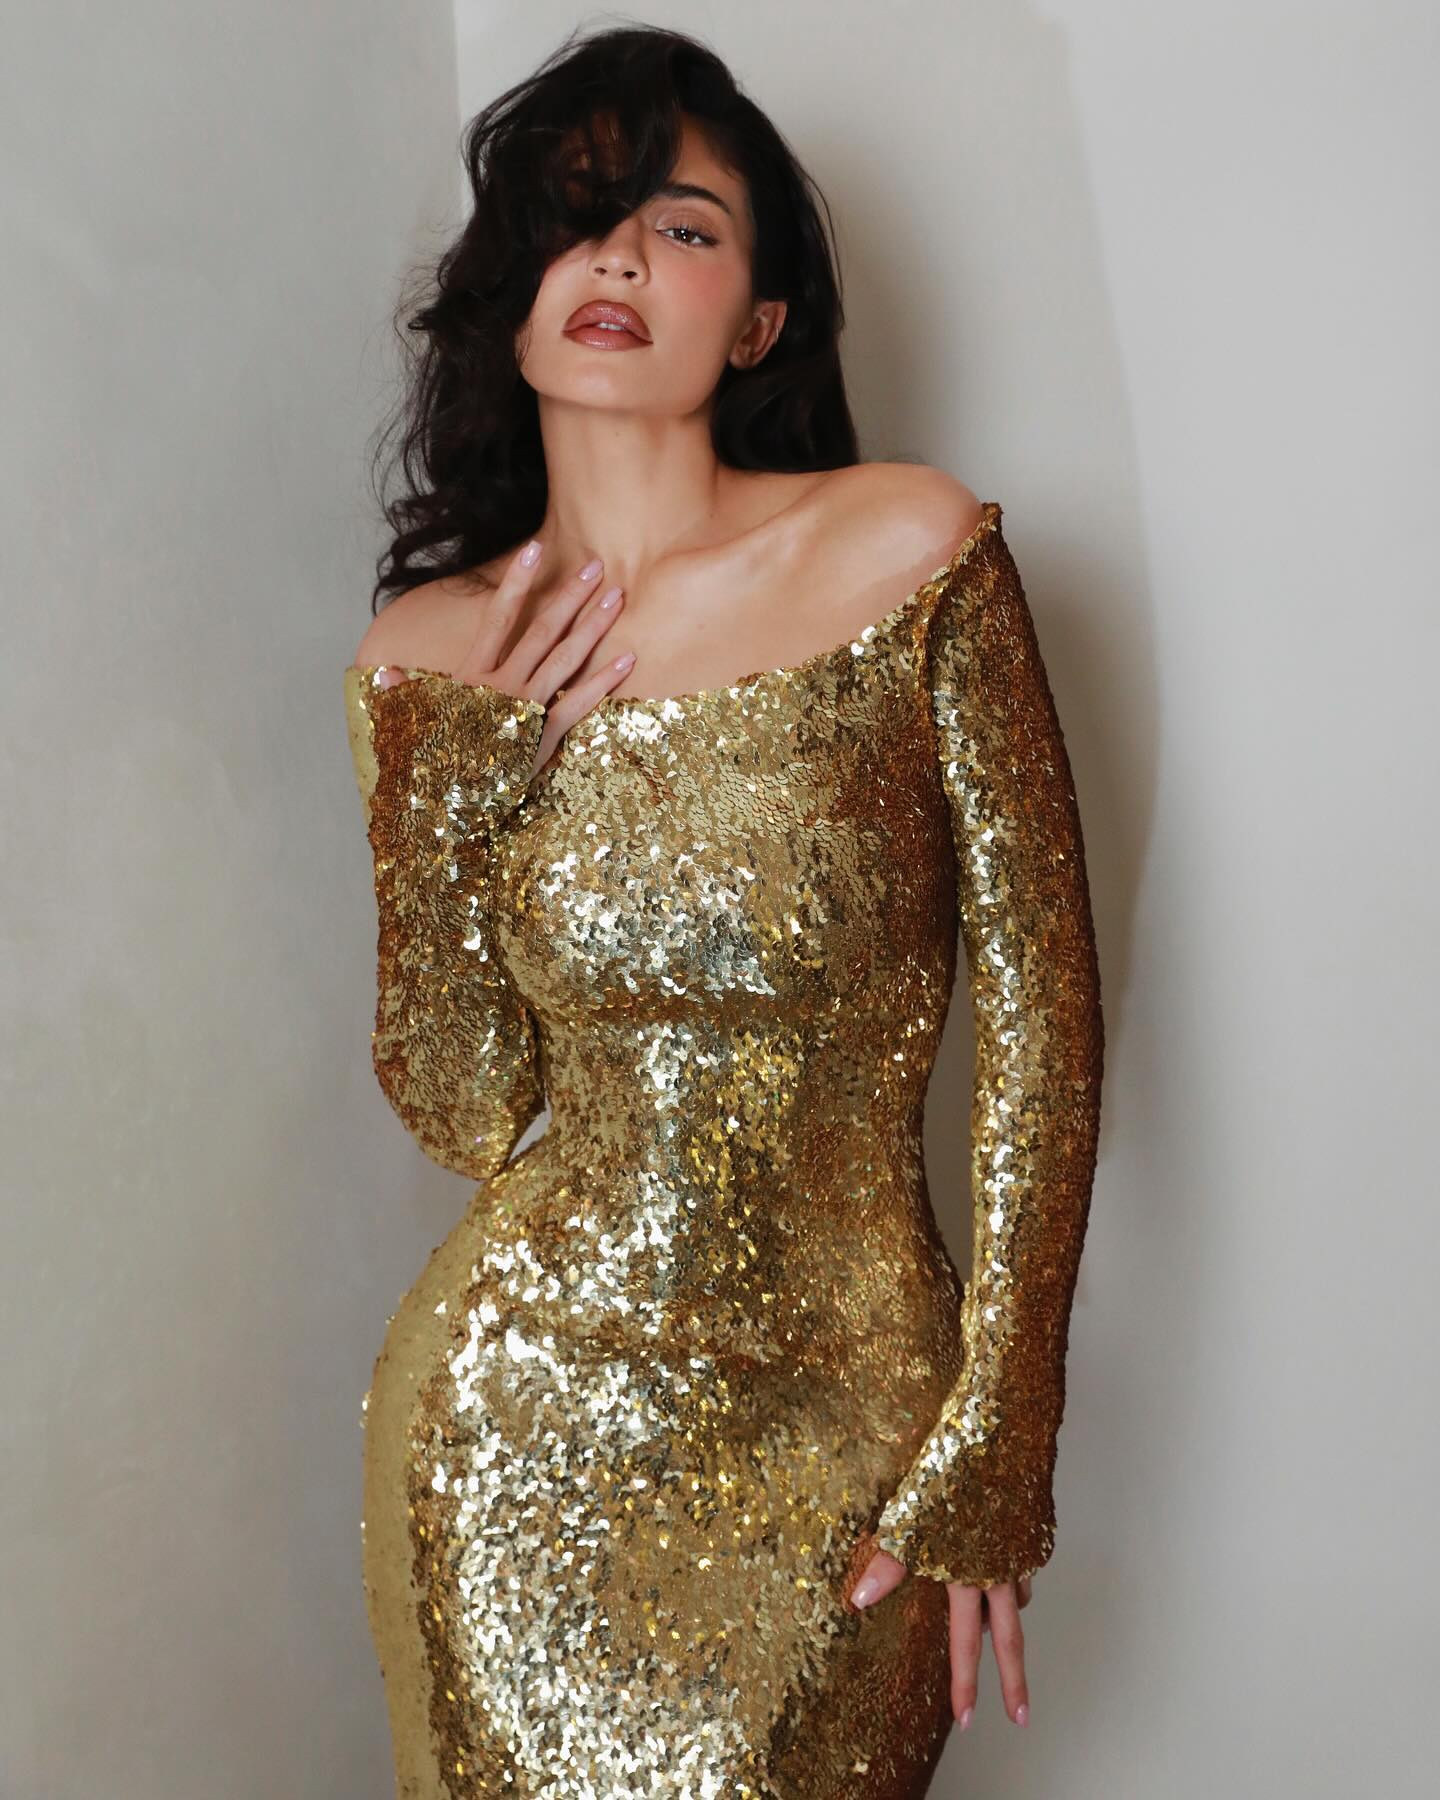 Photos n°2 : Kylie Jenner’s Gold Christmas Dress!